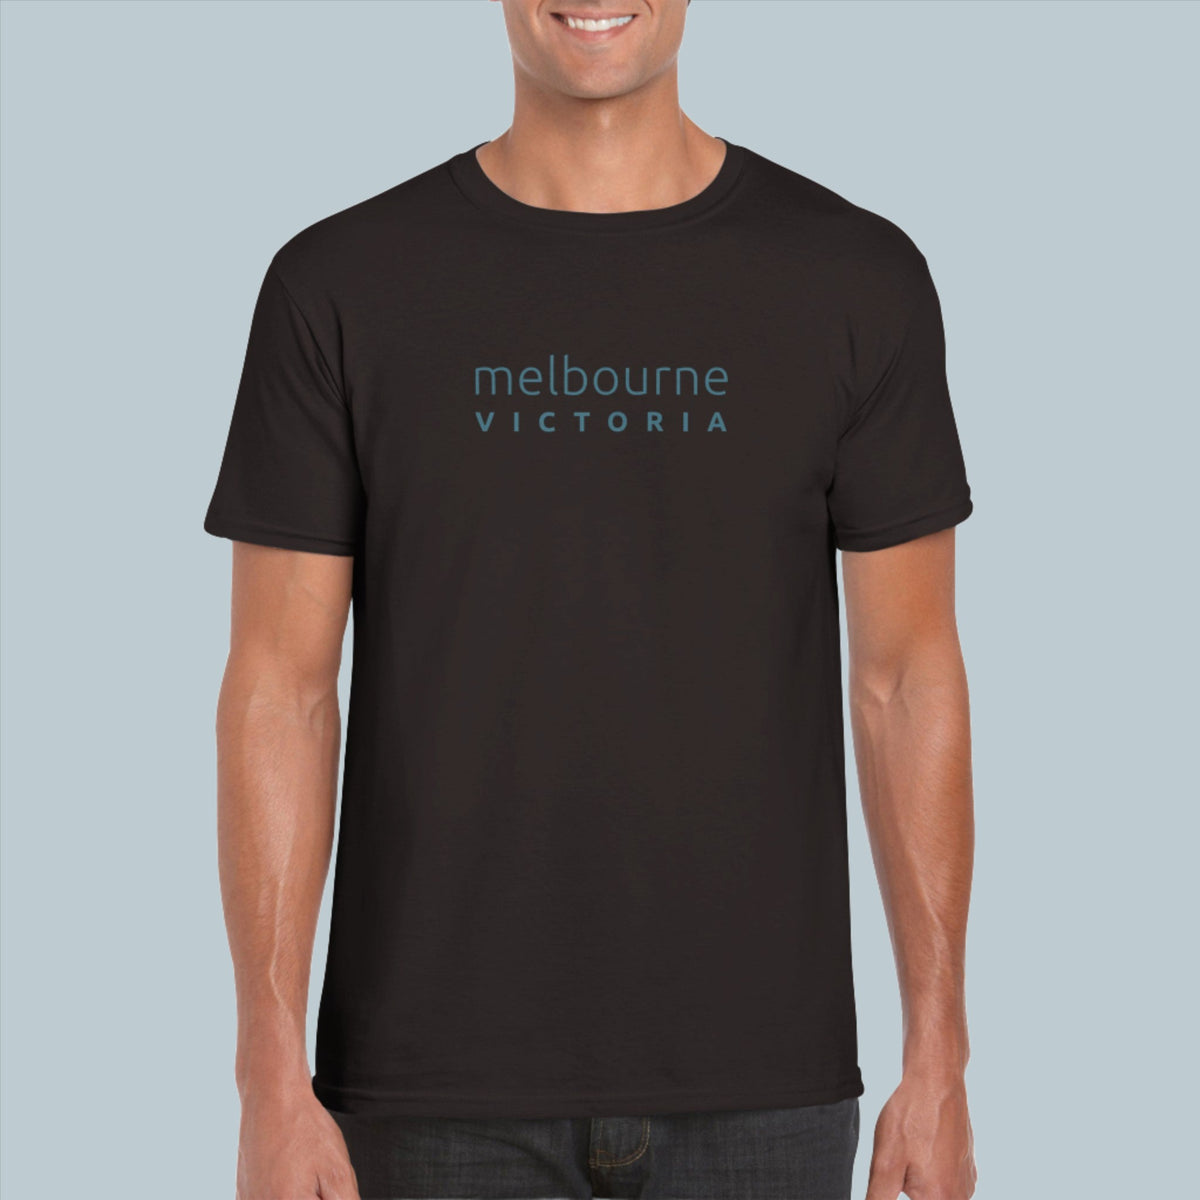 Mens Melbourne Victoria chocolate brown t shirt - MangoBap